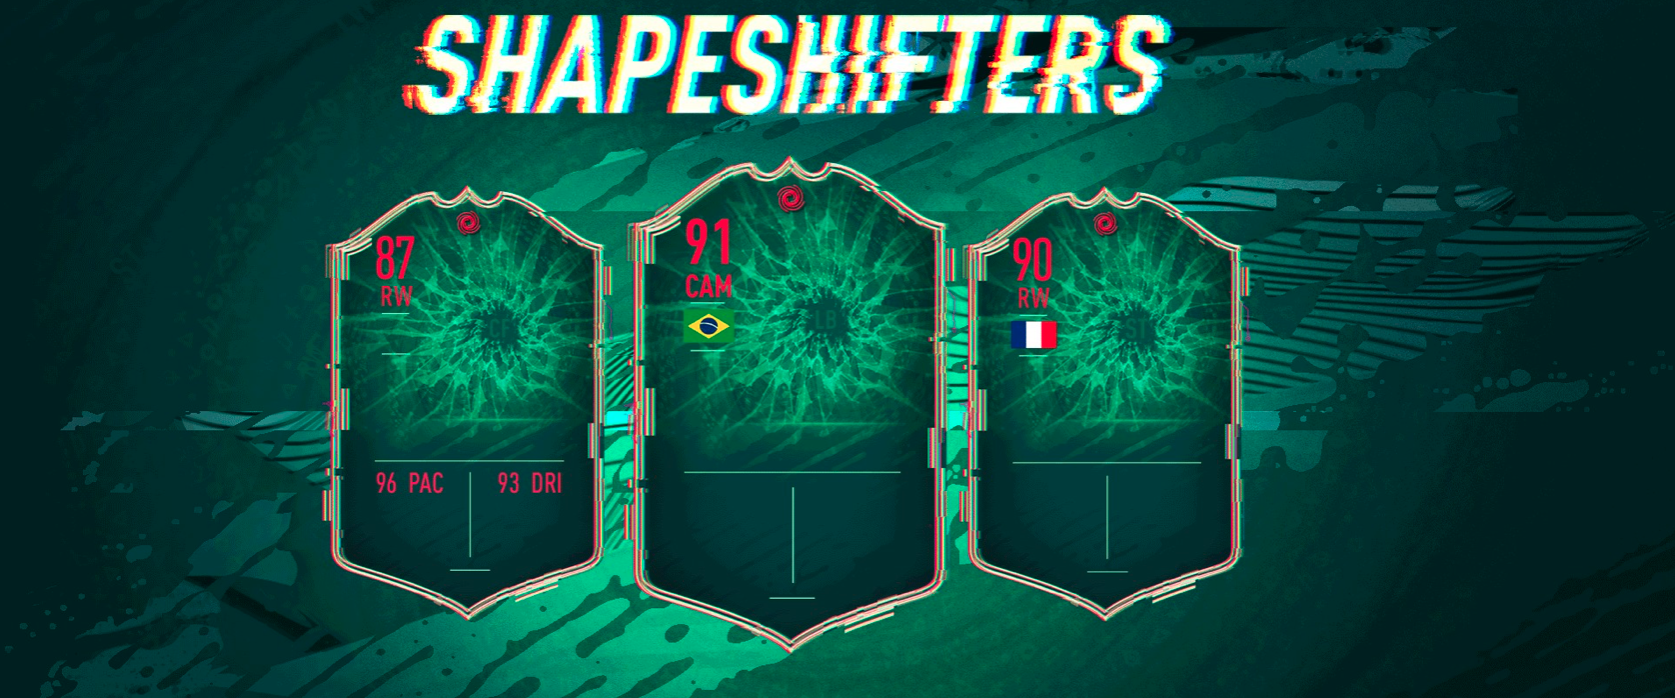 FIFA 20: Das neue Shapeshifters-Event bringt kuriose Positionswechsel